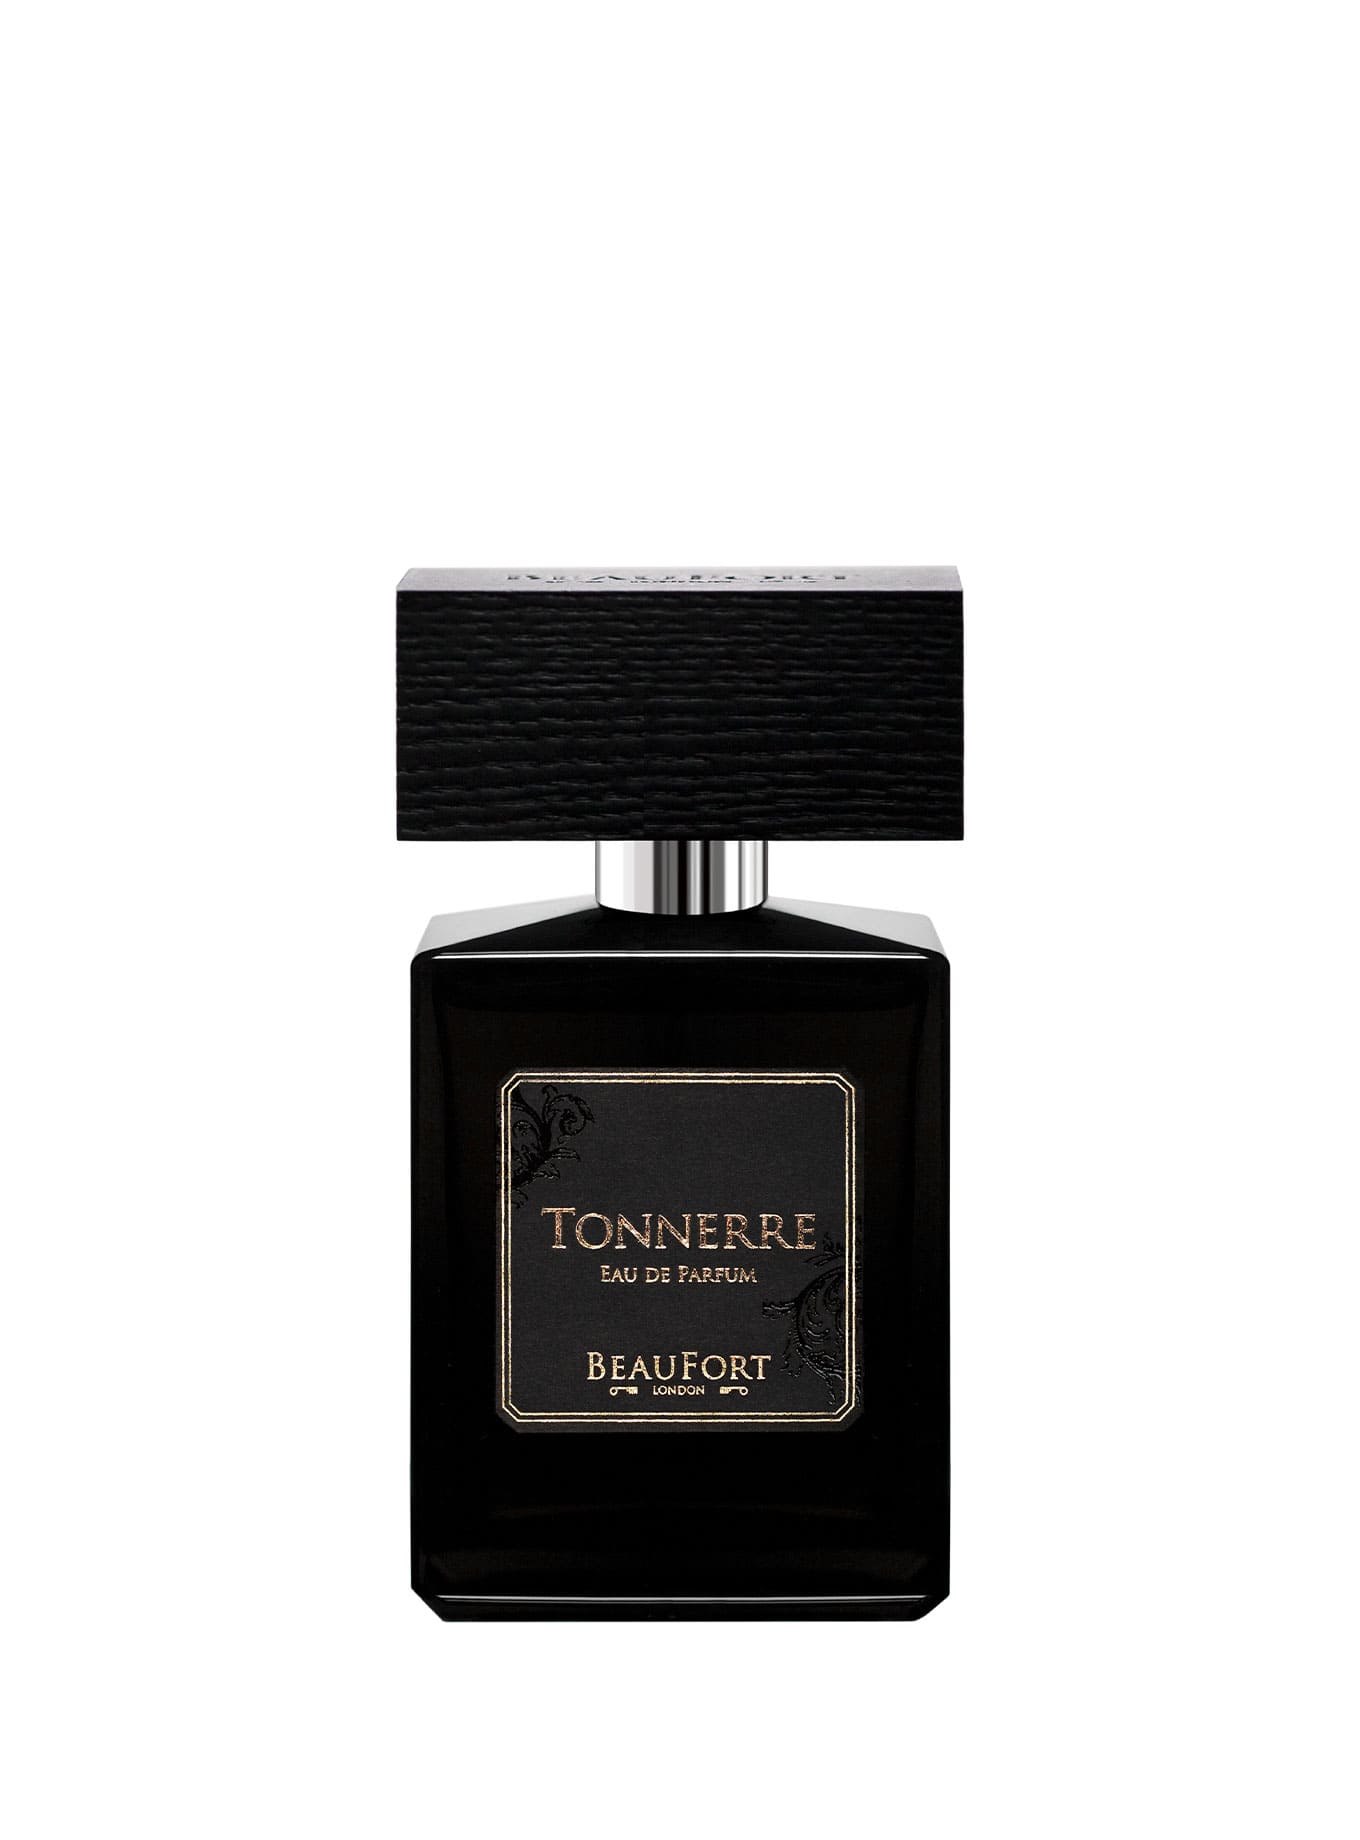 El hermoso frasco de perfume Tonnerre, de la marca Beaufort